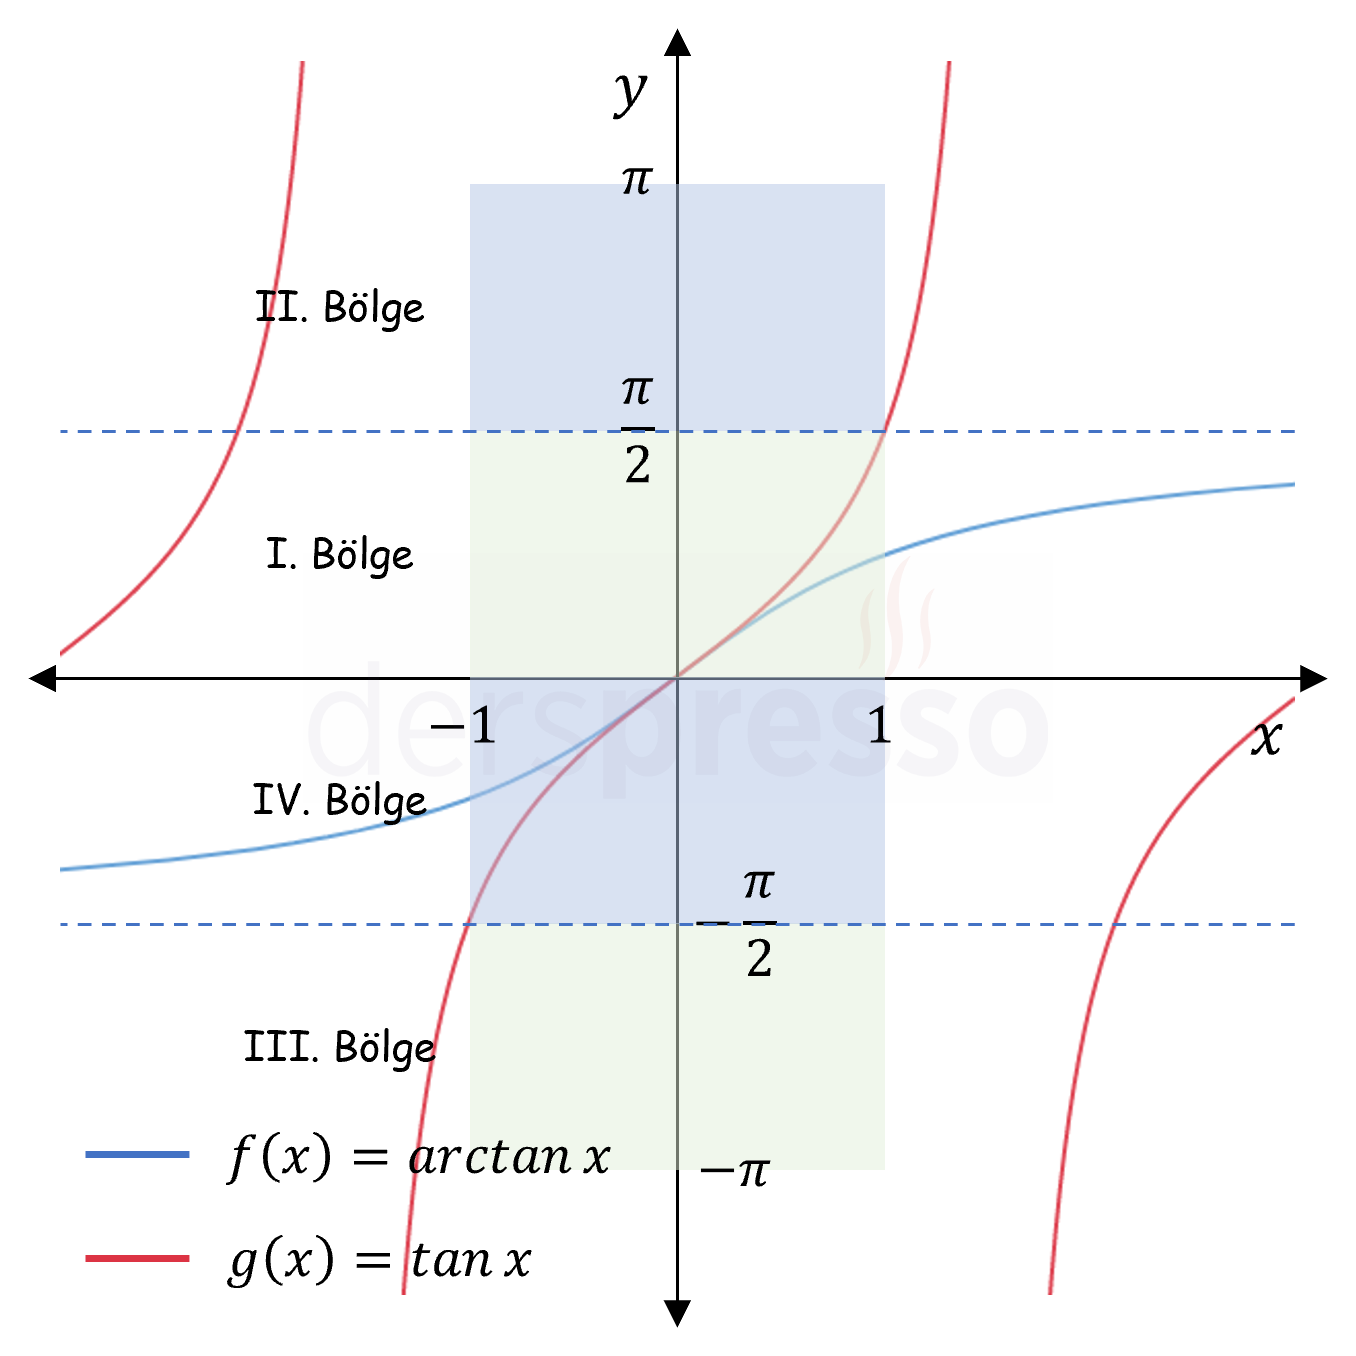 Arc tanjant fonksiyon grafiği